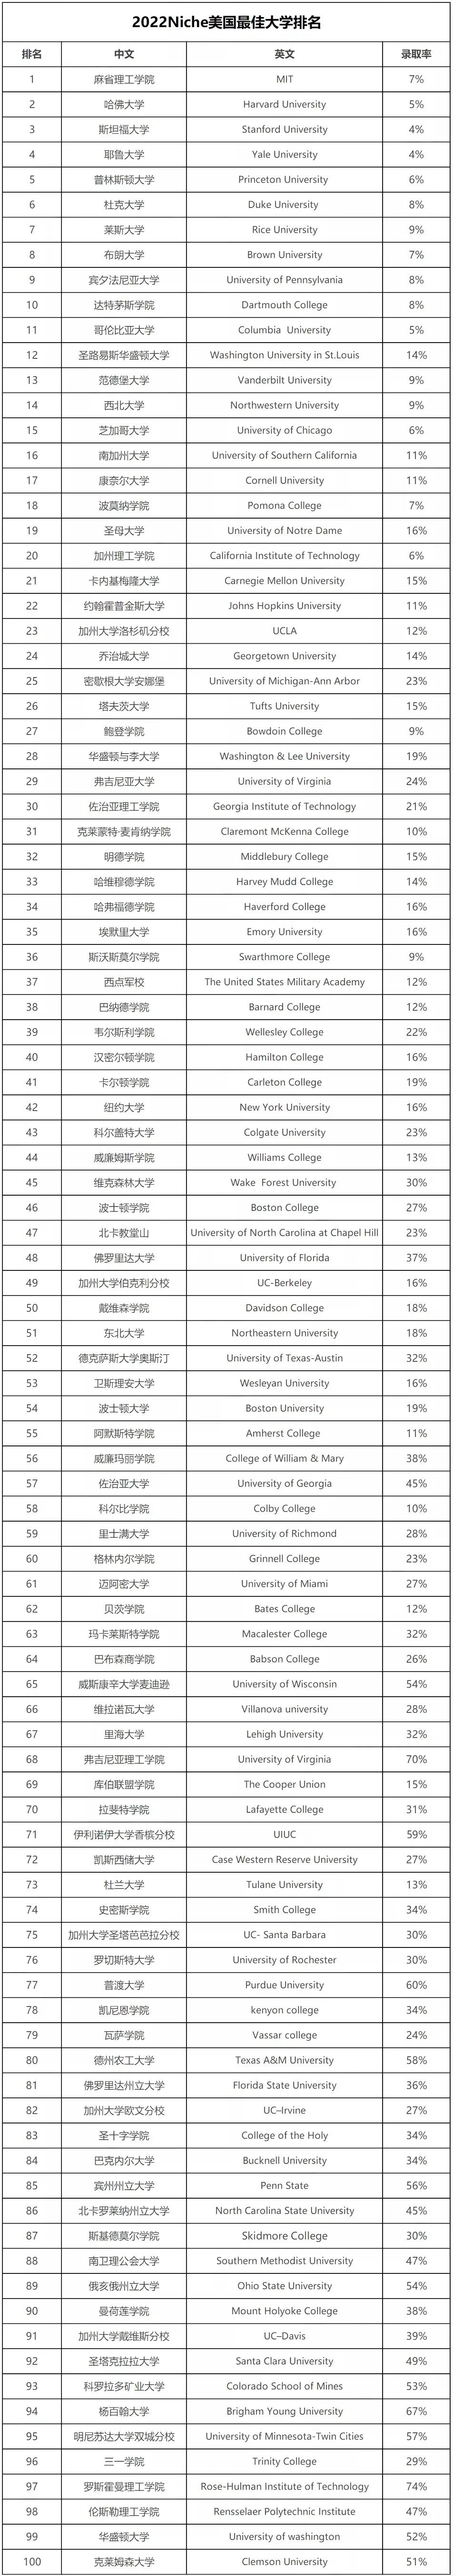 Niche发布2022美国大学排行榜！